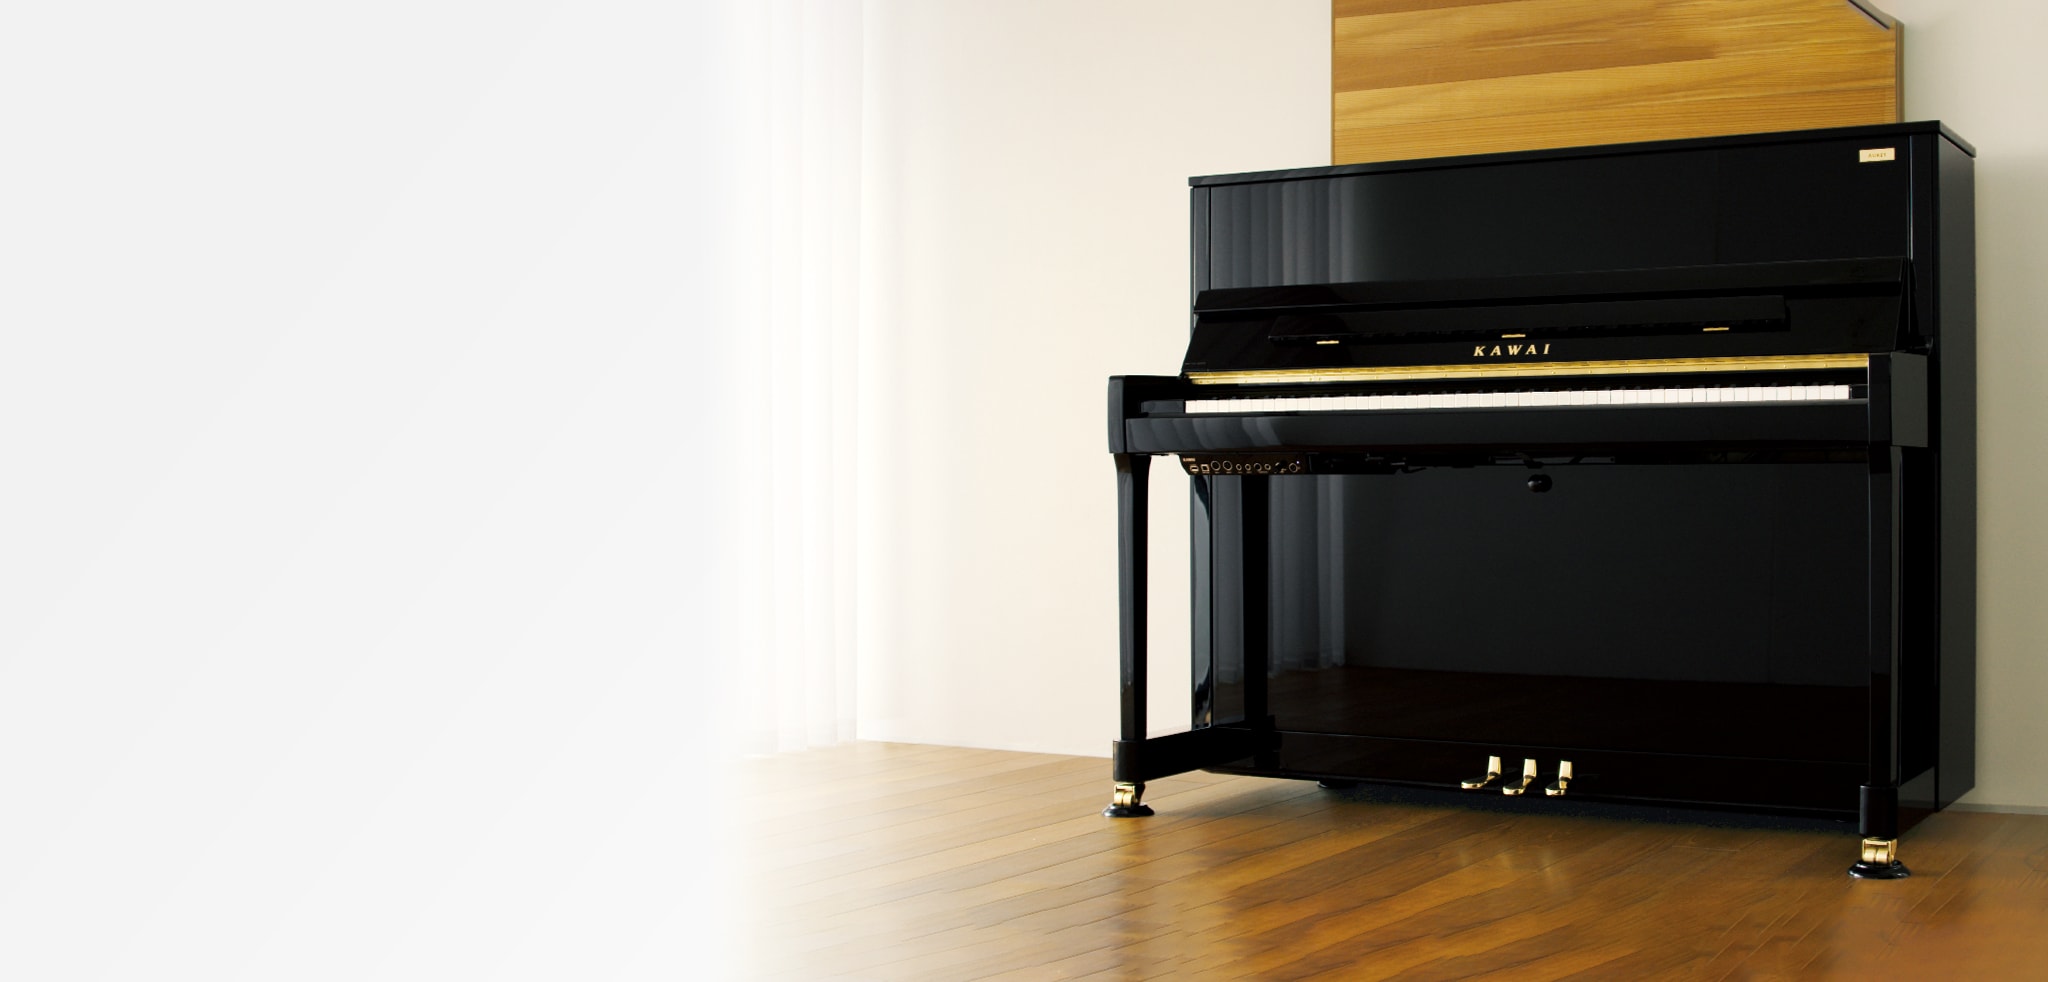 ignore strip host Kawai AURES AR｜Hybrid Pianos｜Products｜Kawai Musical Instruments  Manufacturing Co., Ltd.